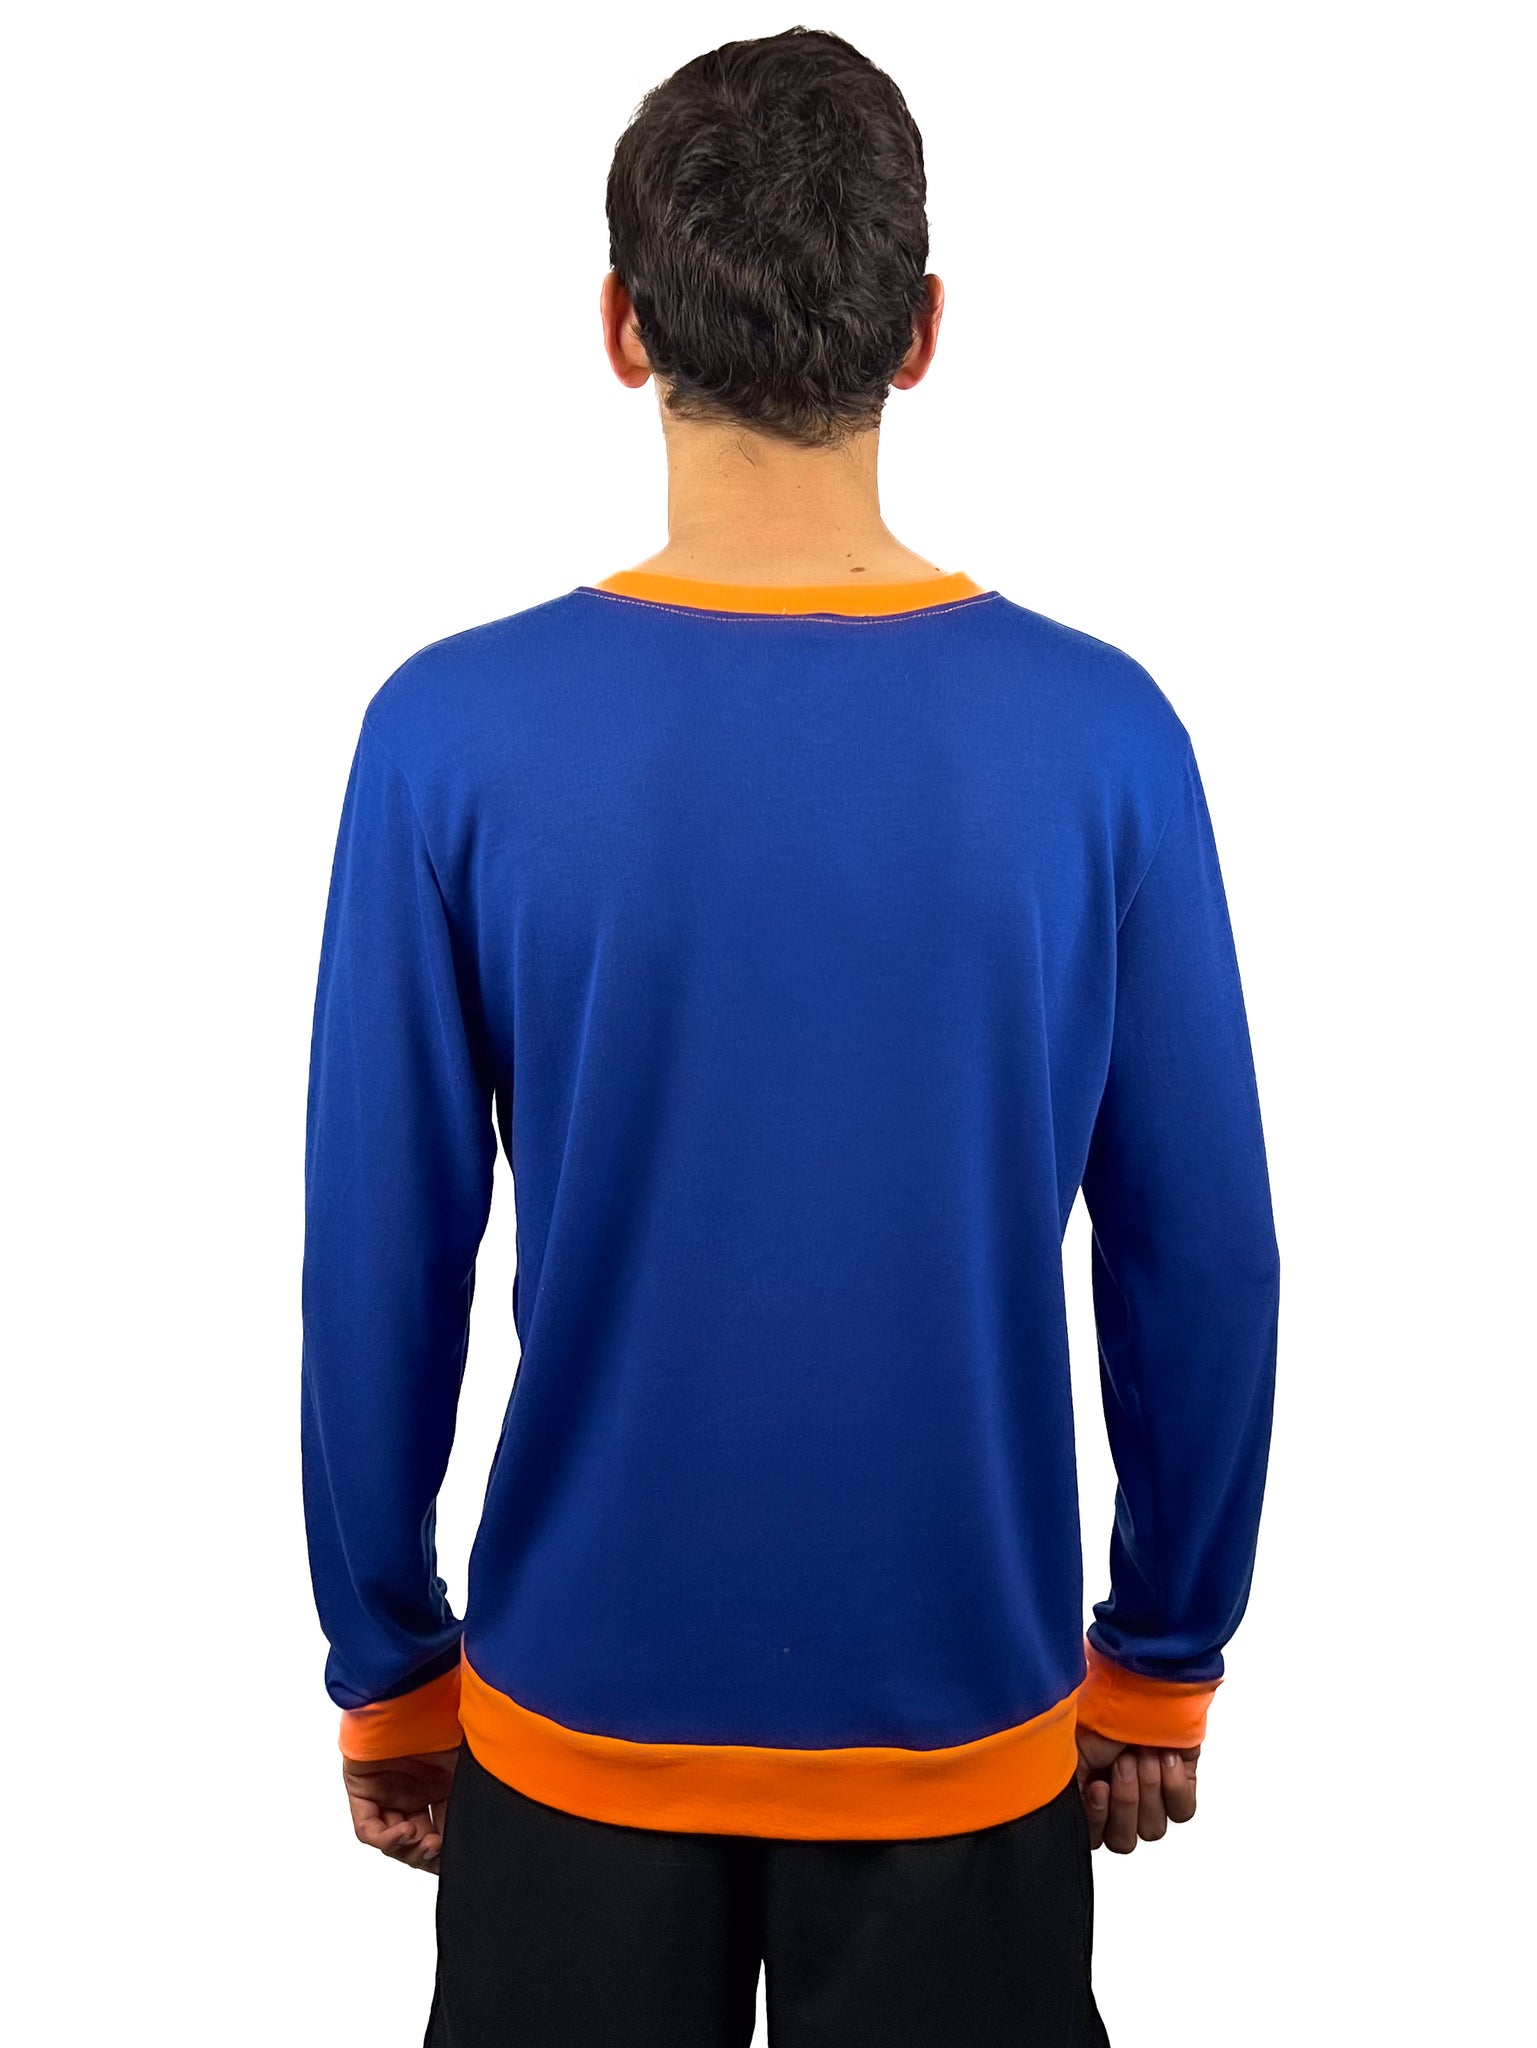 The "Orange Crush" Super Soft Sweater